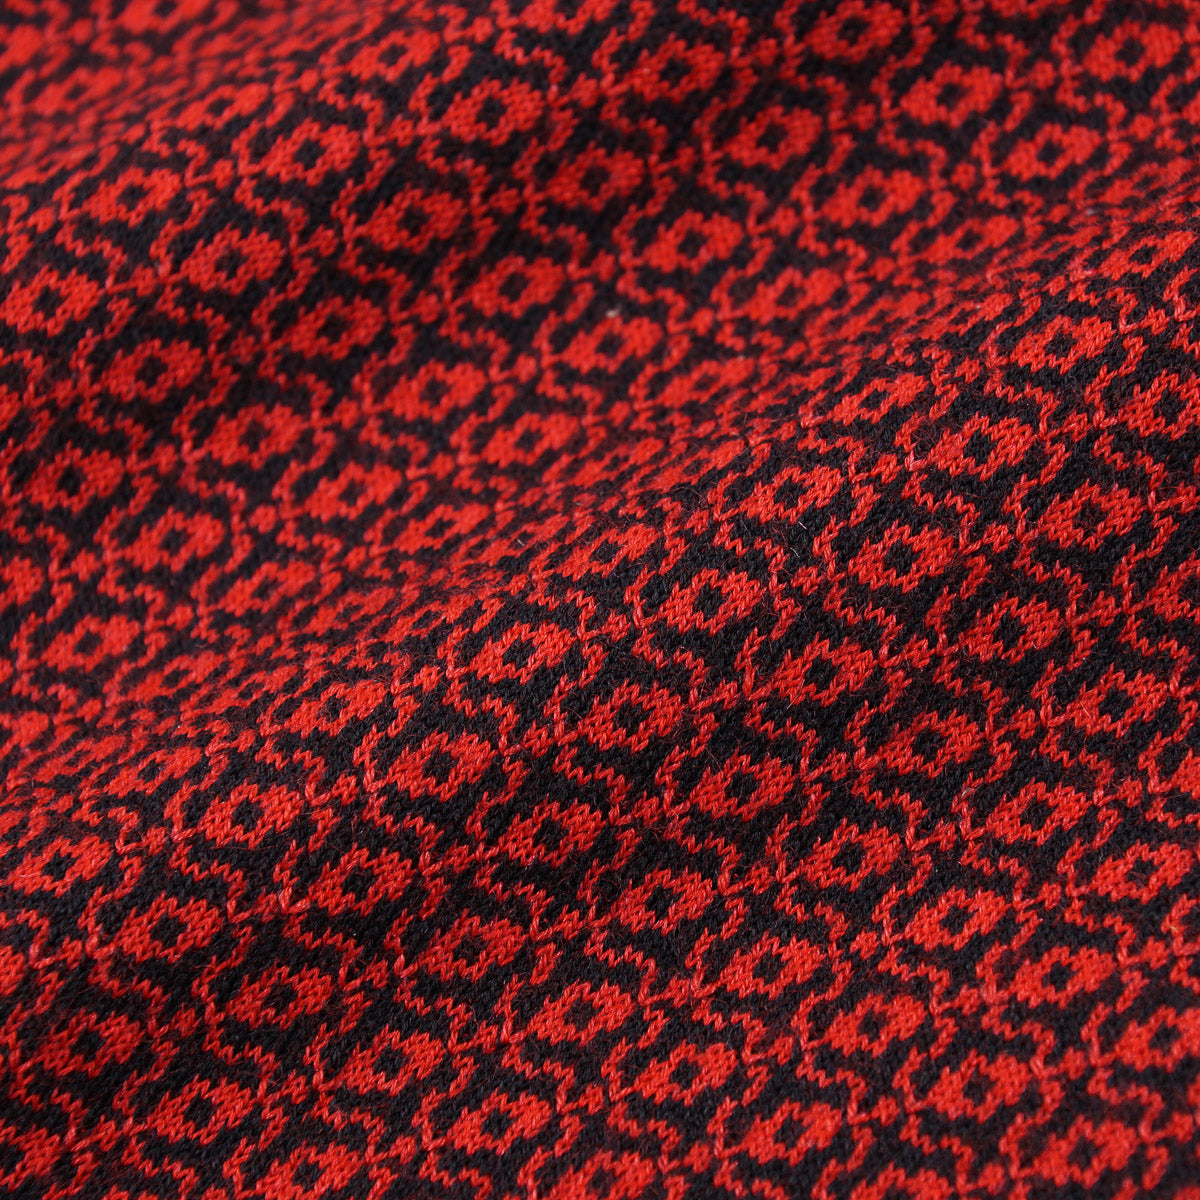 Kiton Cashmere and Silk Polo Sweater - Top Shelf Apparel